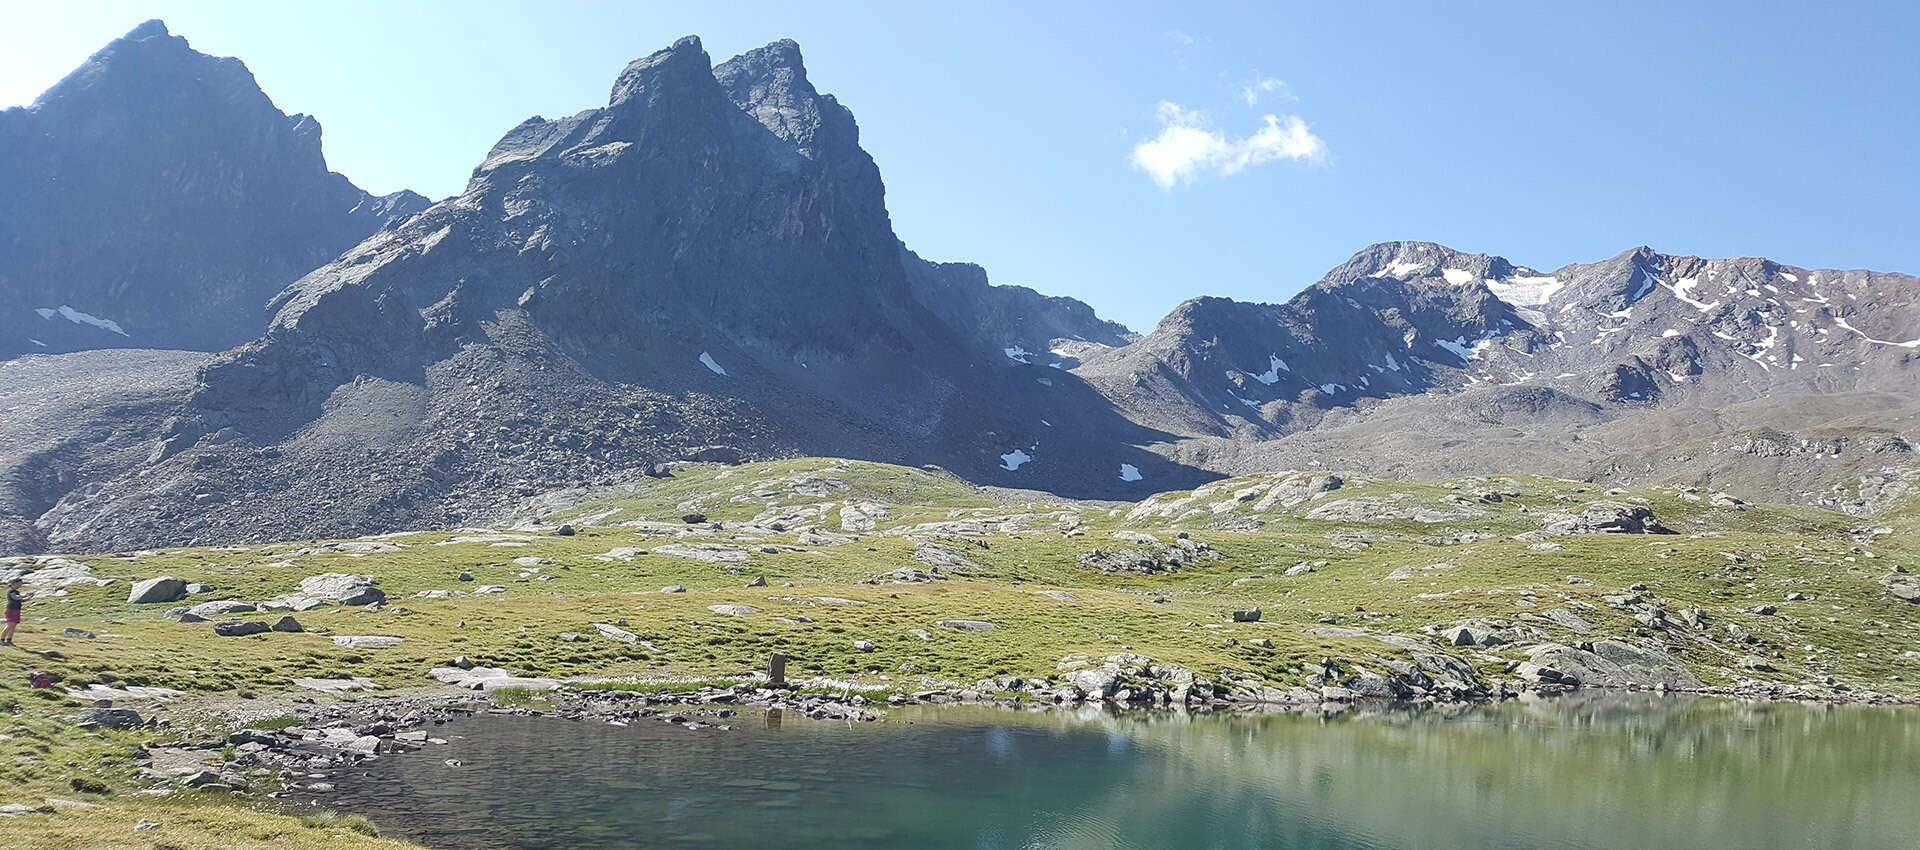 Mountain range with a lake in the Kaunertal